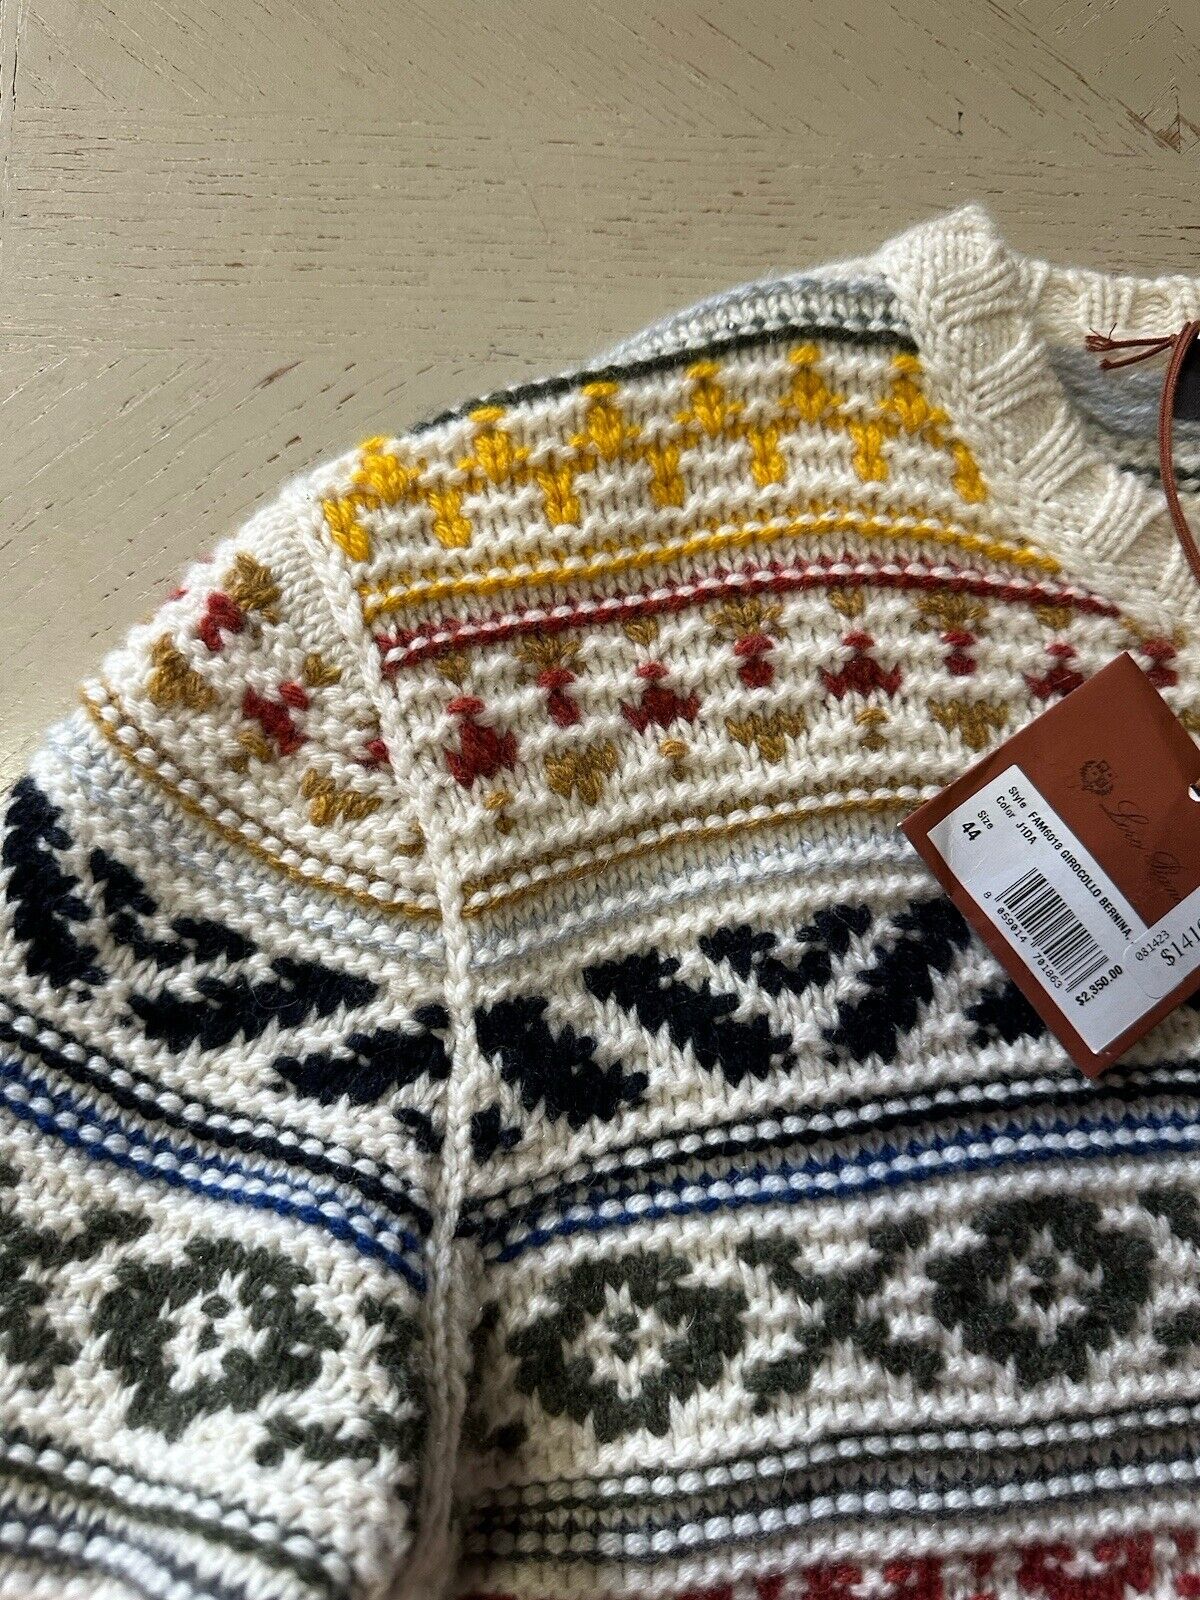 Loro Piana Women Bernina Pattern Cashmere Sweater BEIGE MULTI 44/10 New $2350